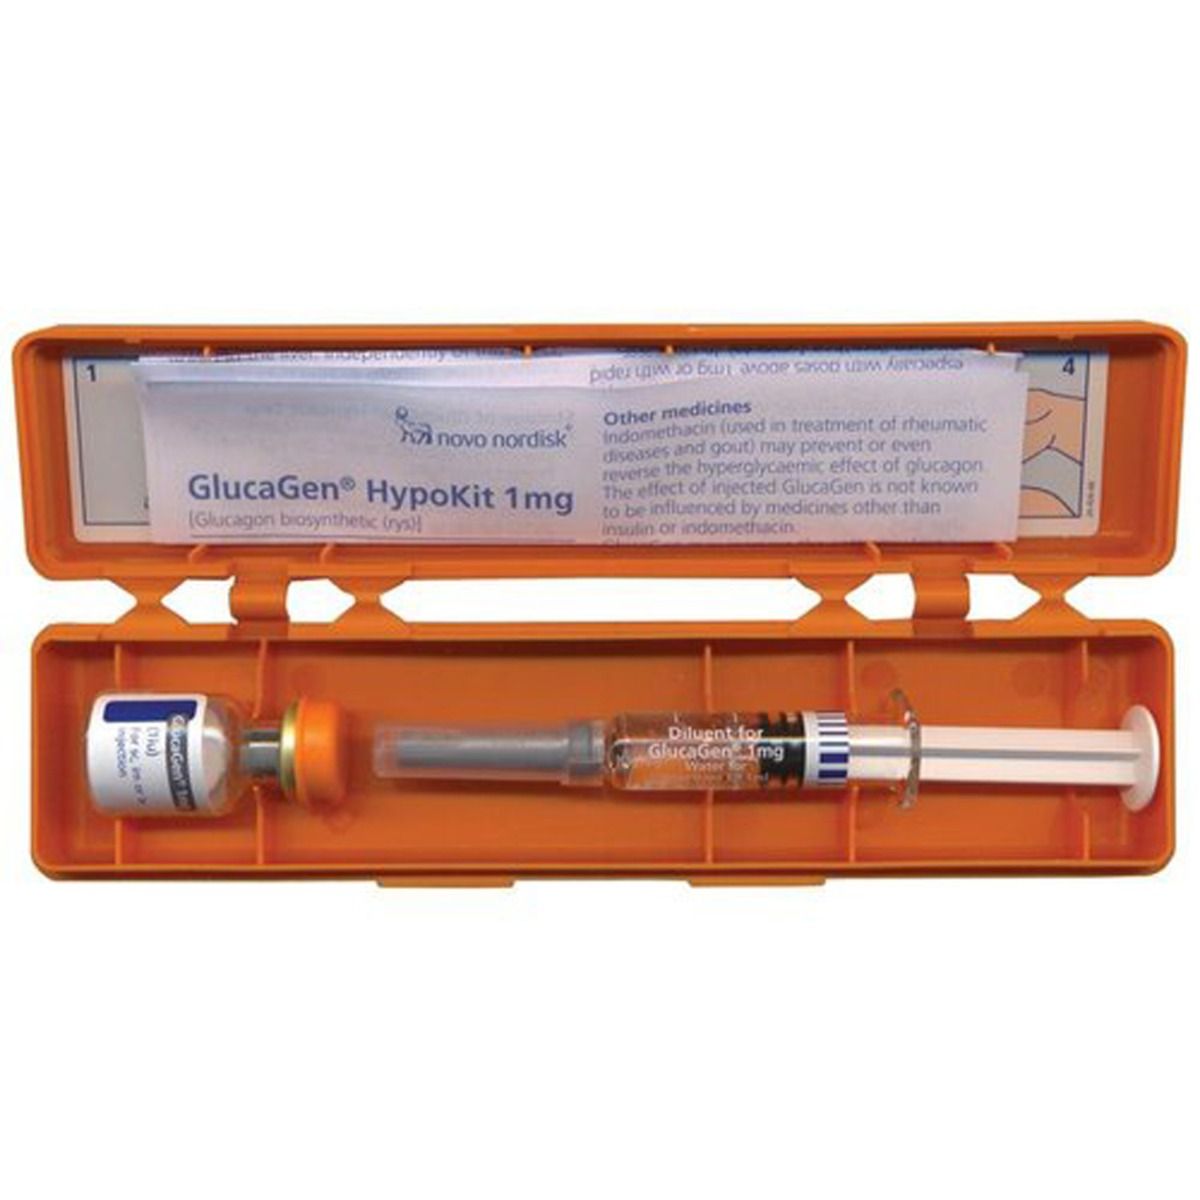 Buy Glucagen HypoKit 1mg Injection Online